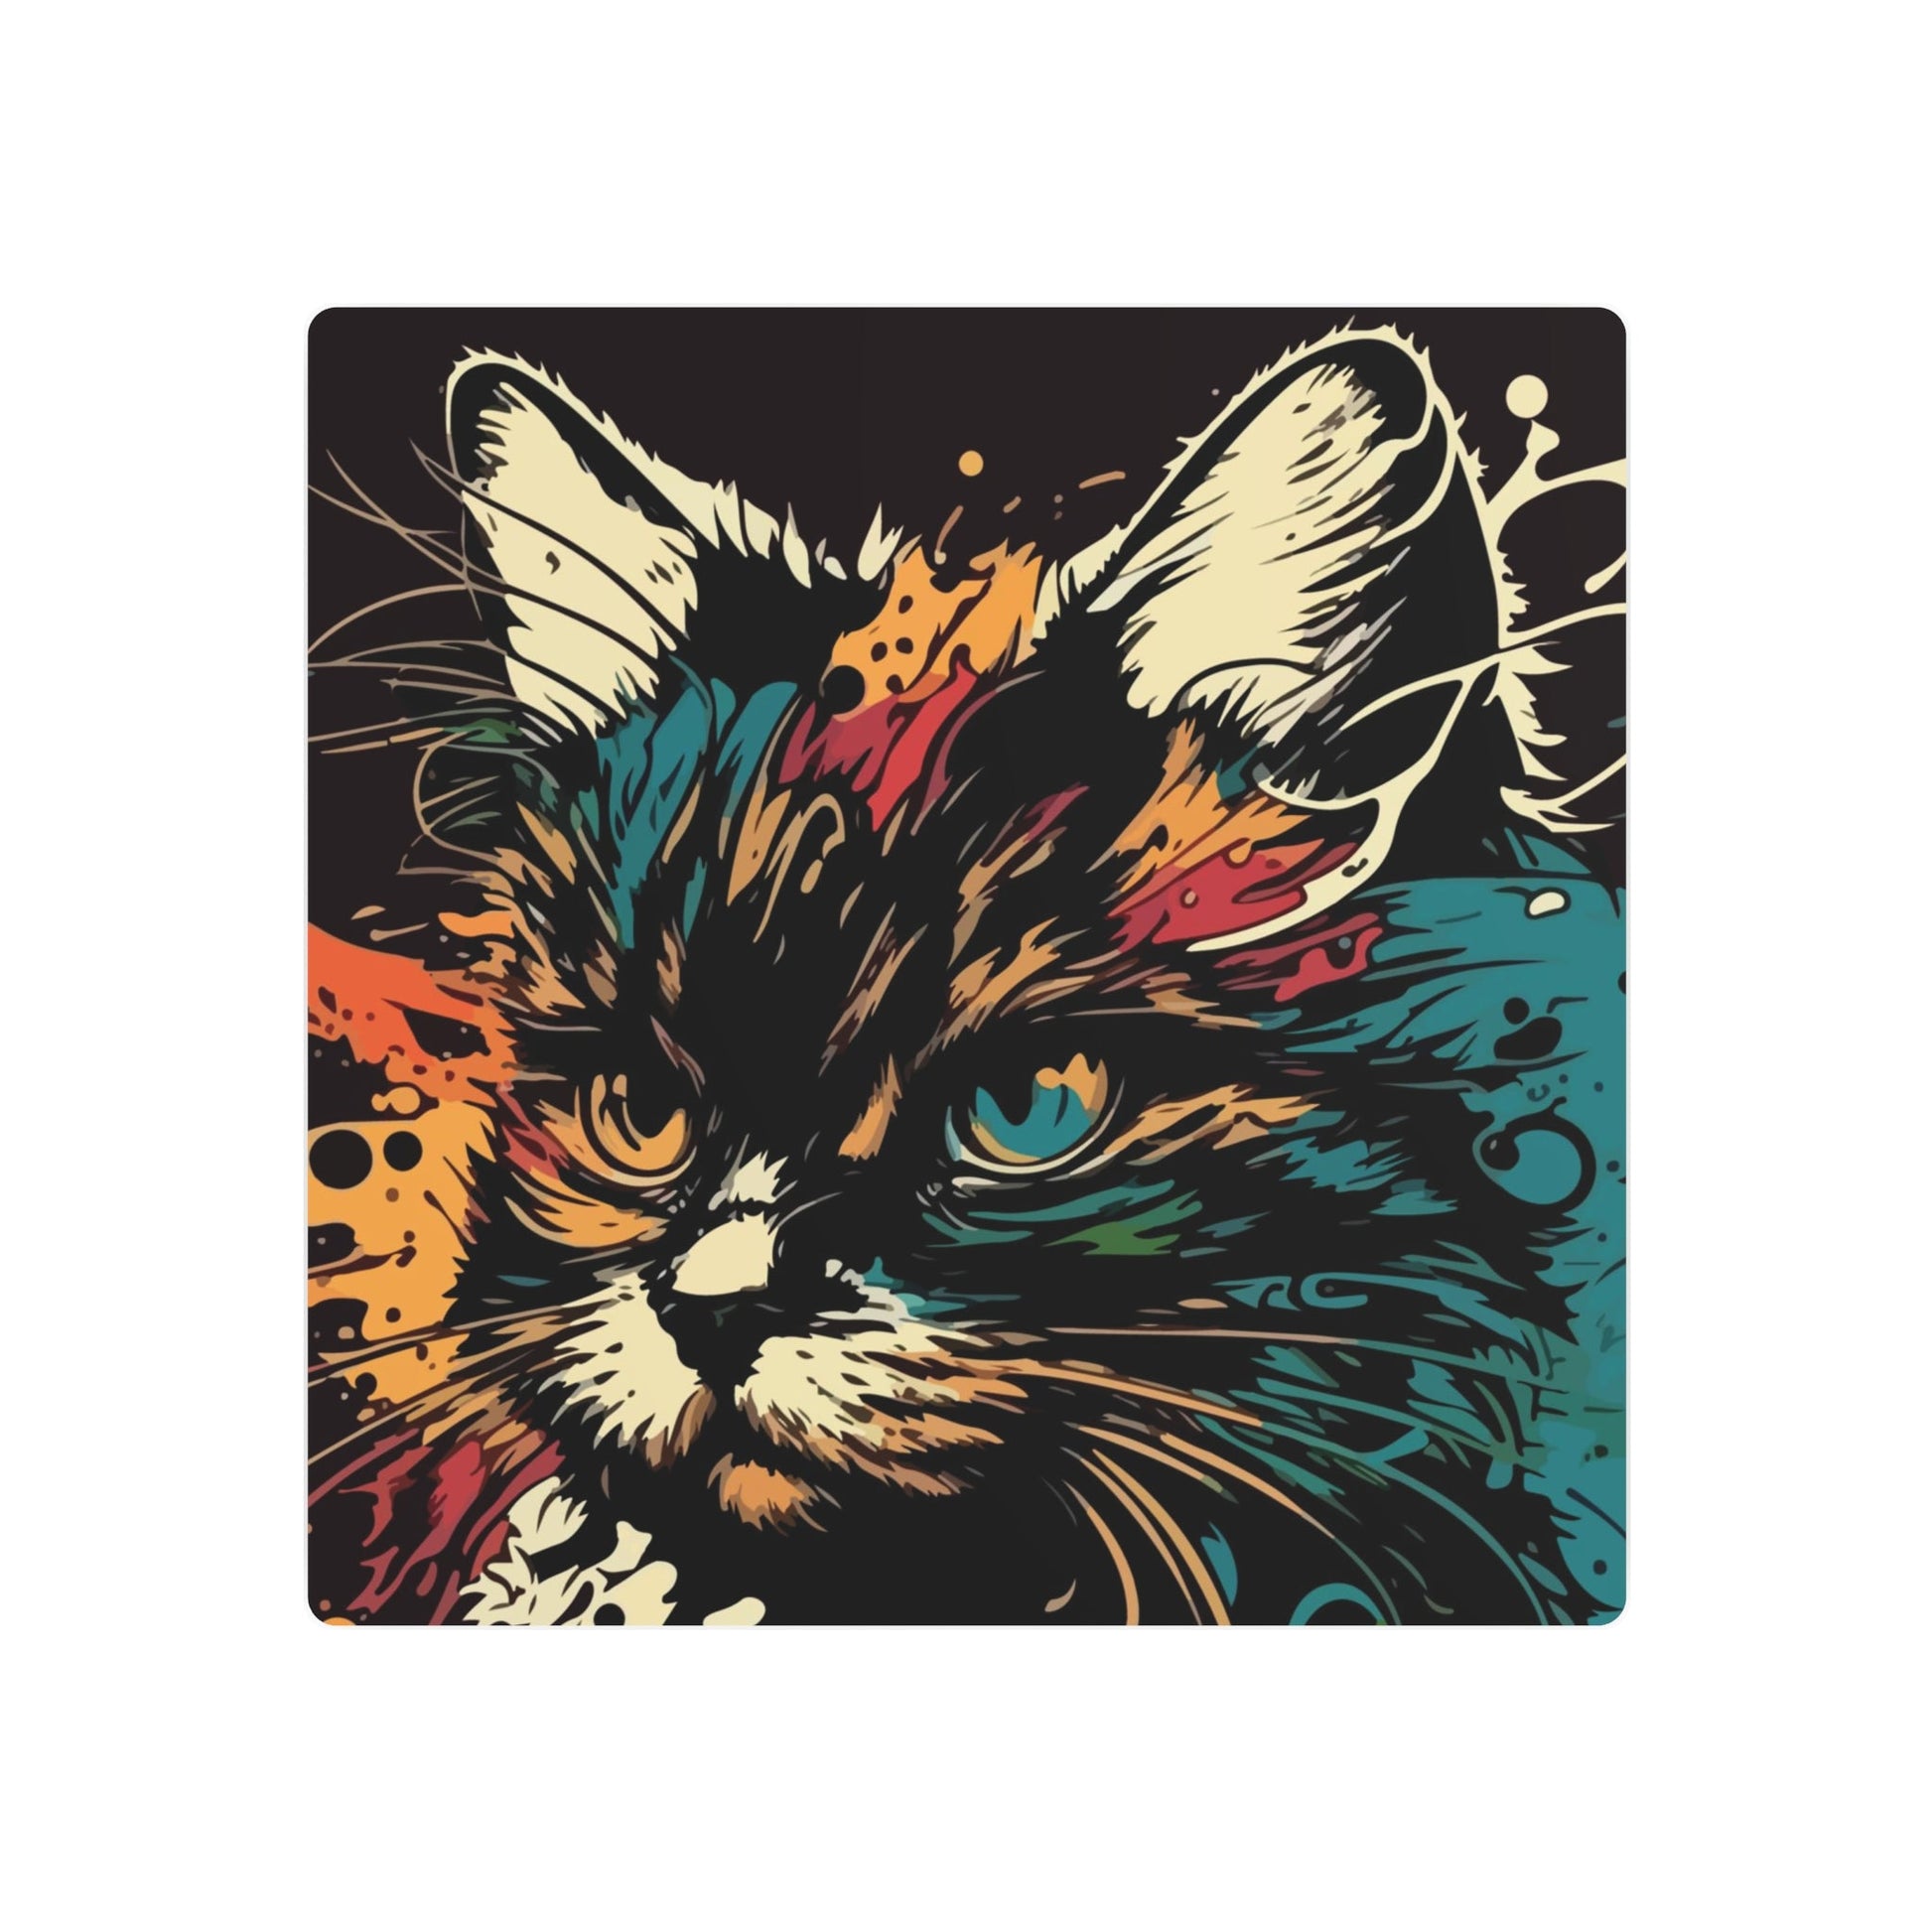 Arty Cat Metal Art Sign - Epileptic Al’s Shop